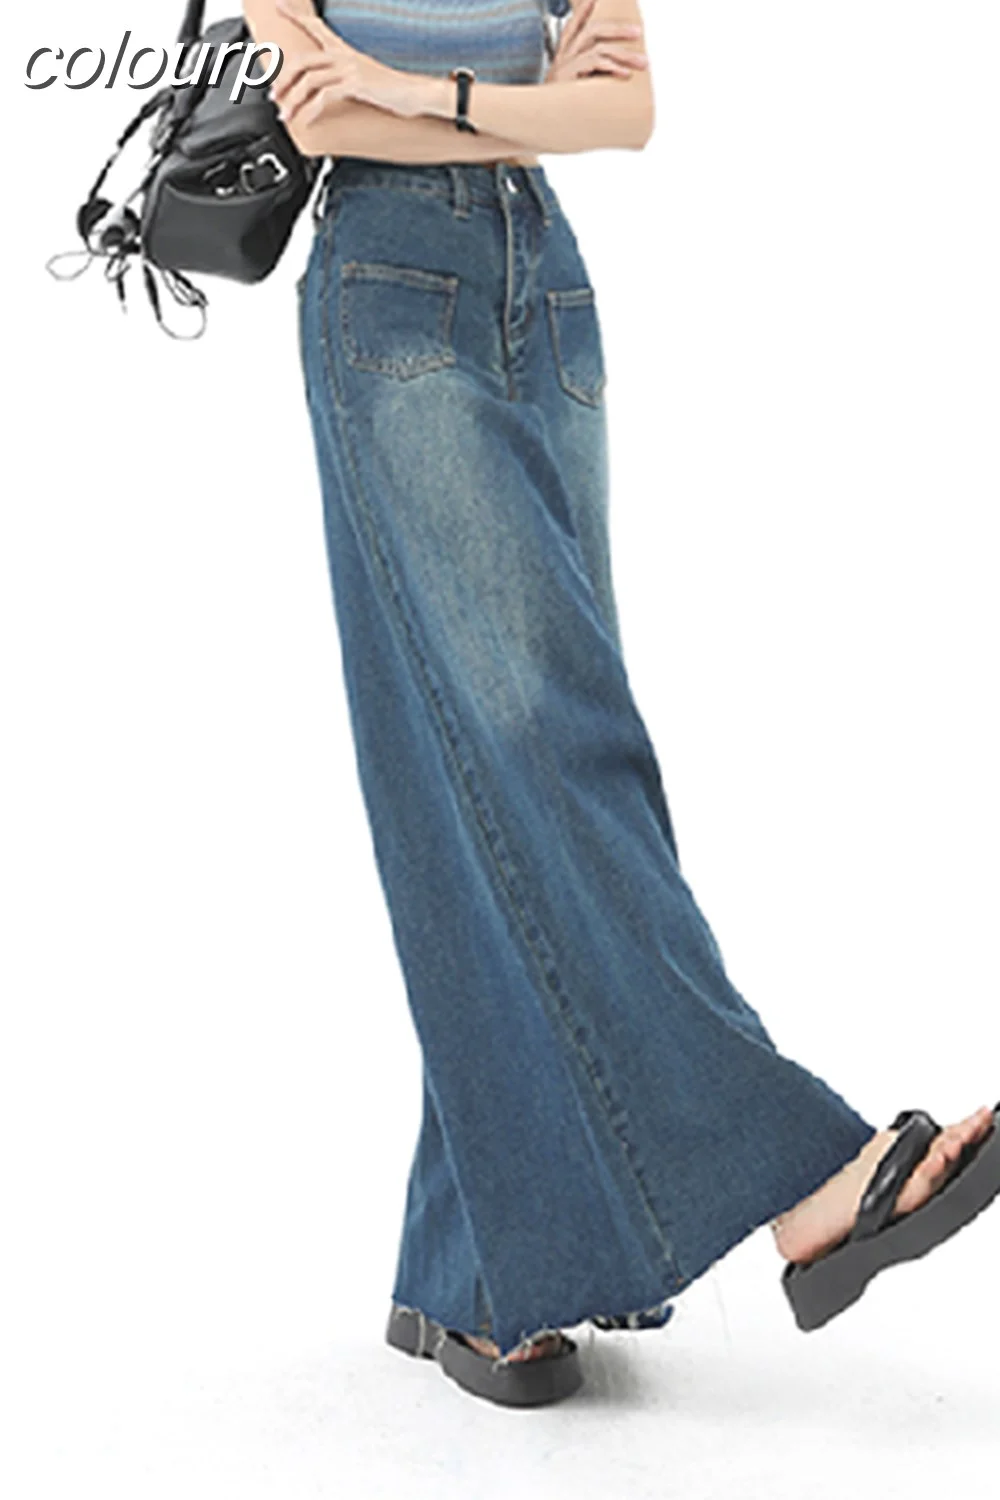 colourp Women's Vintage High Waist Streetwear Style Blue Oversized Jeans Pants Korean Fashion Wide Leg Baggy Y2K Loose Denim Trouser